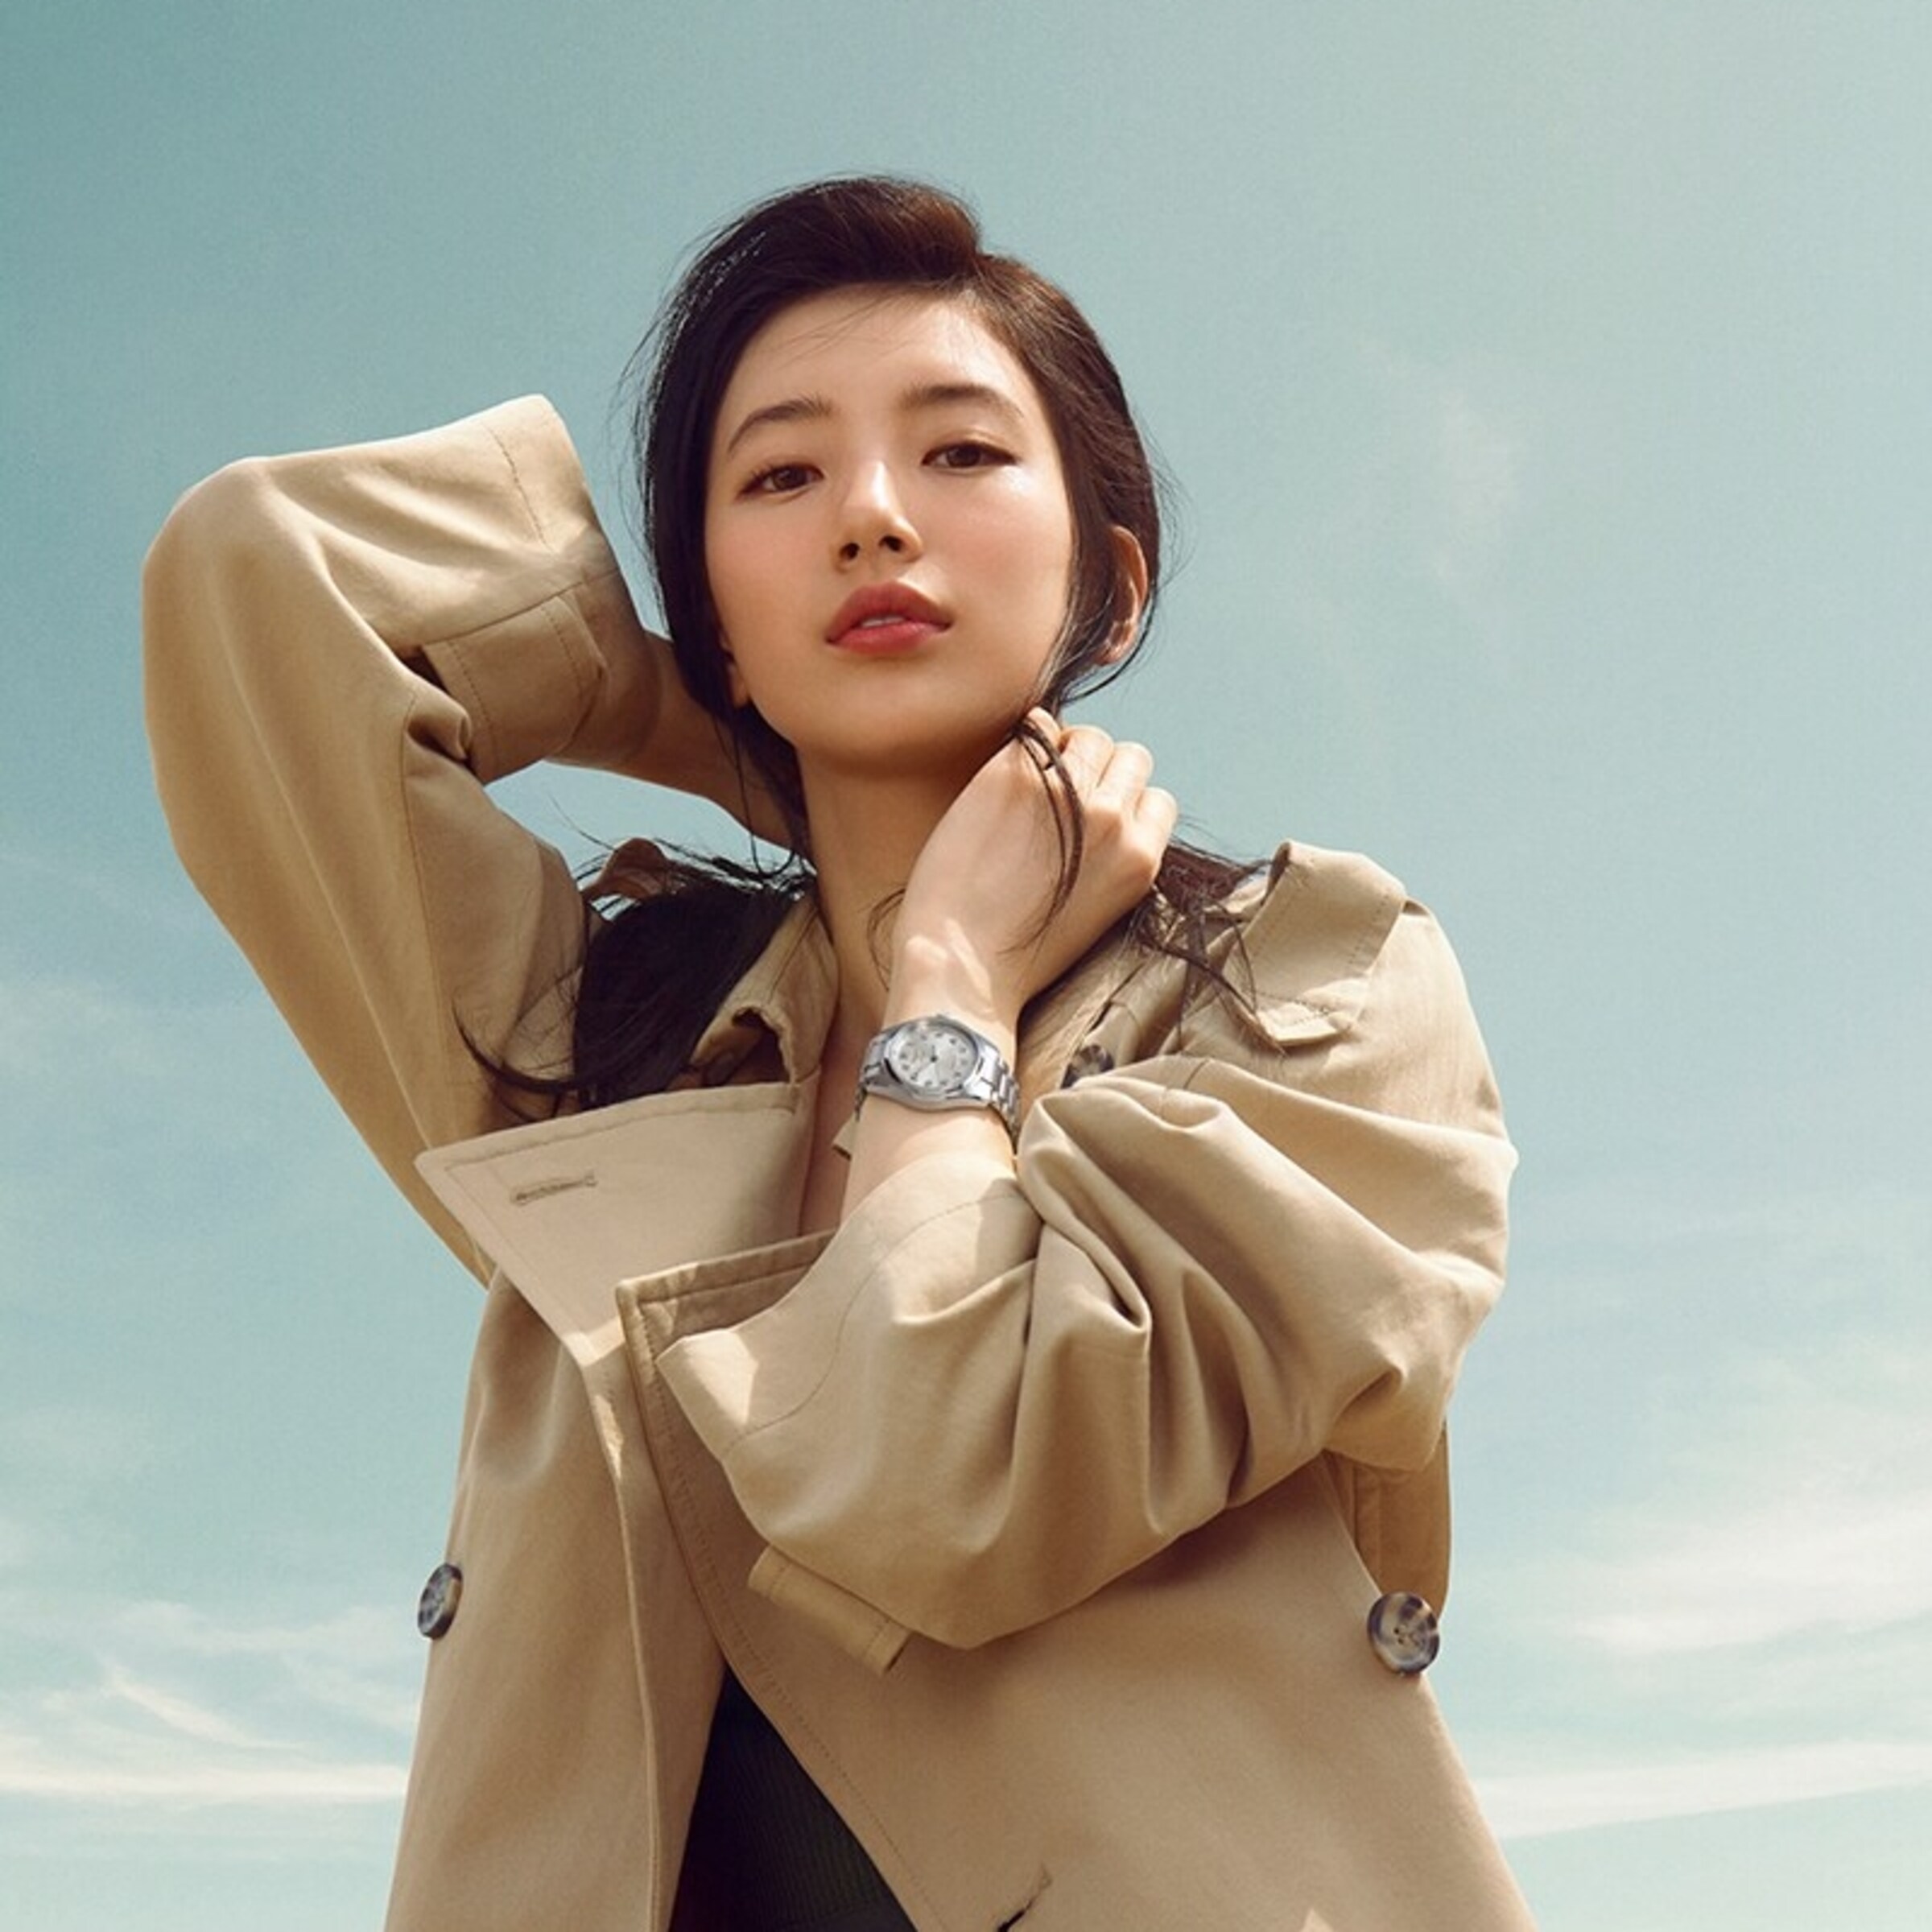 Longines Ambassador of Elegance Suzy is wearing a Longines Spirit watch